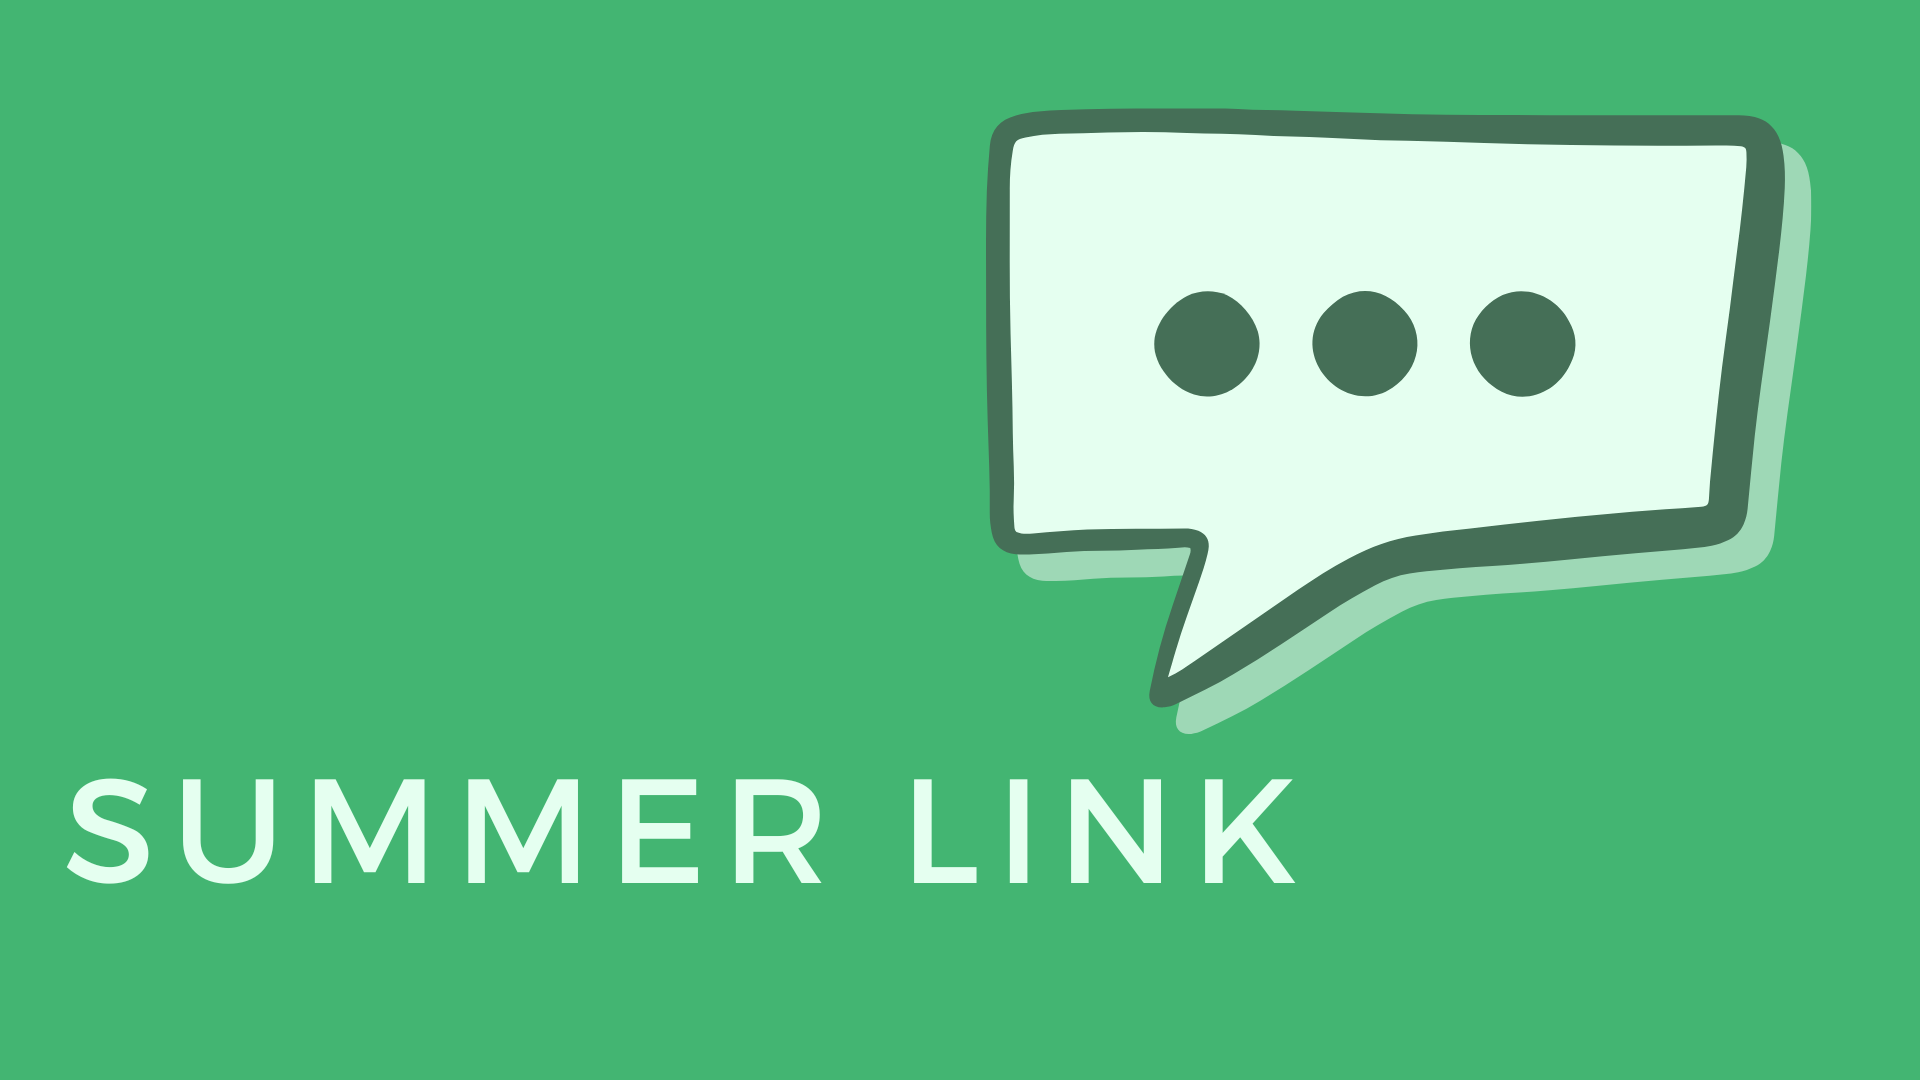 Summer link blank